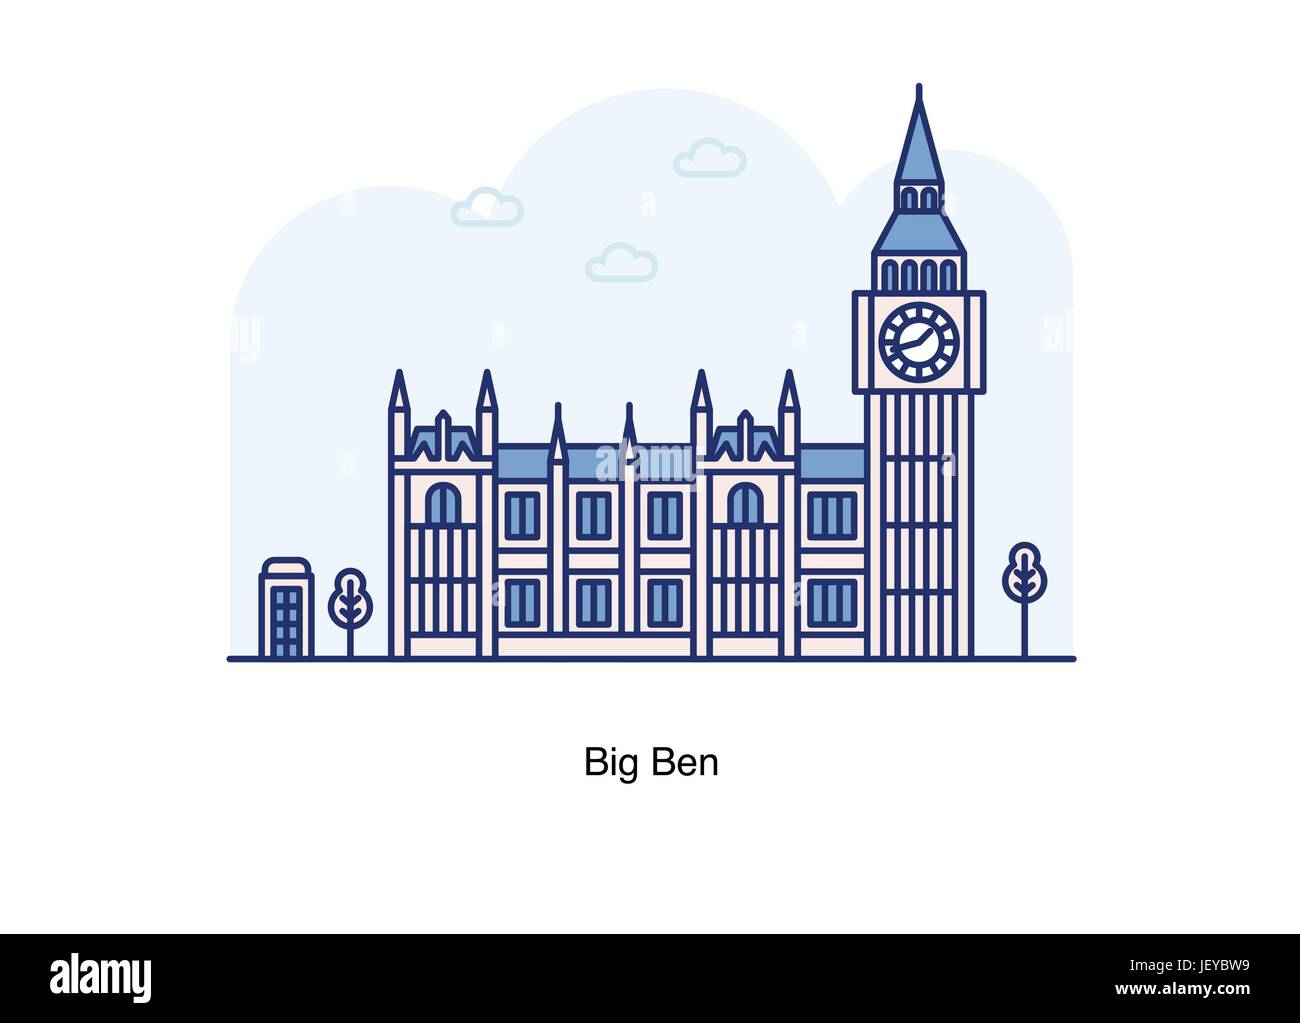 Vektorgrafik-Linie von Big Ben, London, England. Stock Vektor